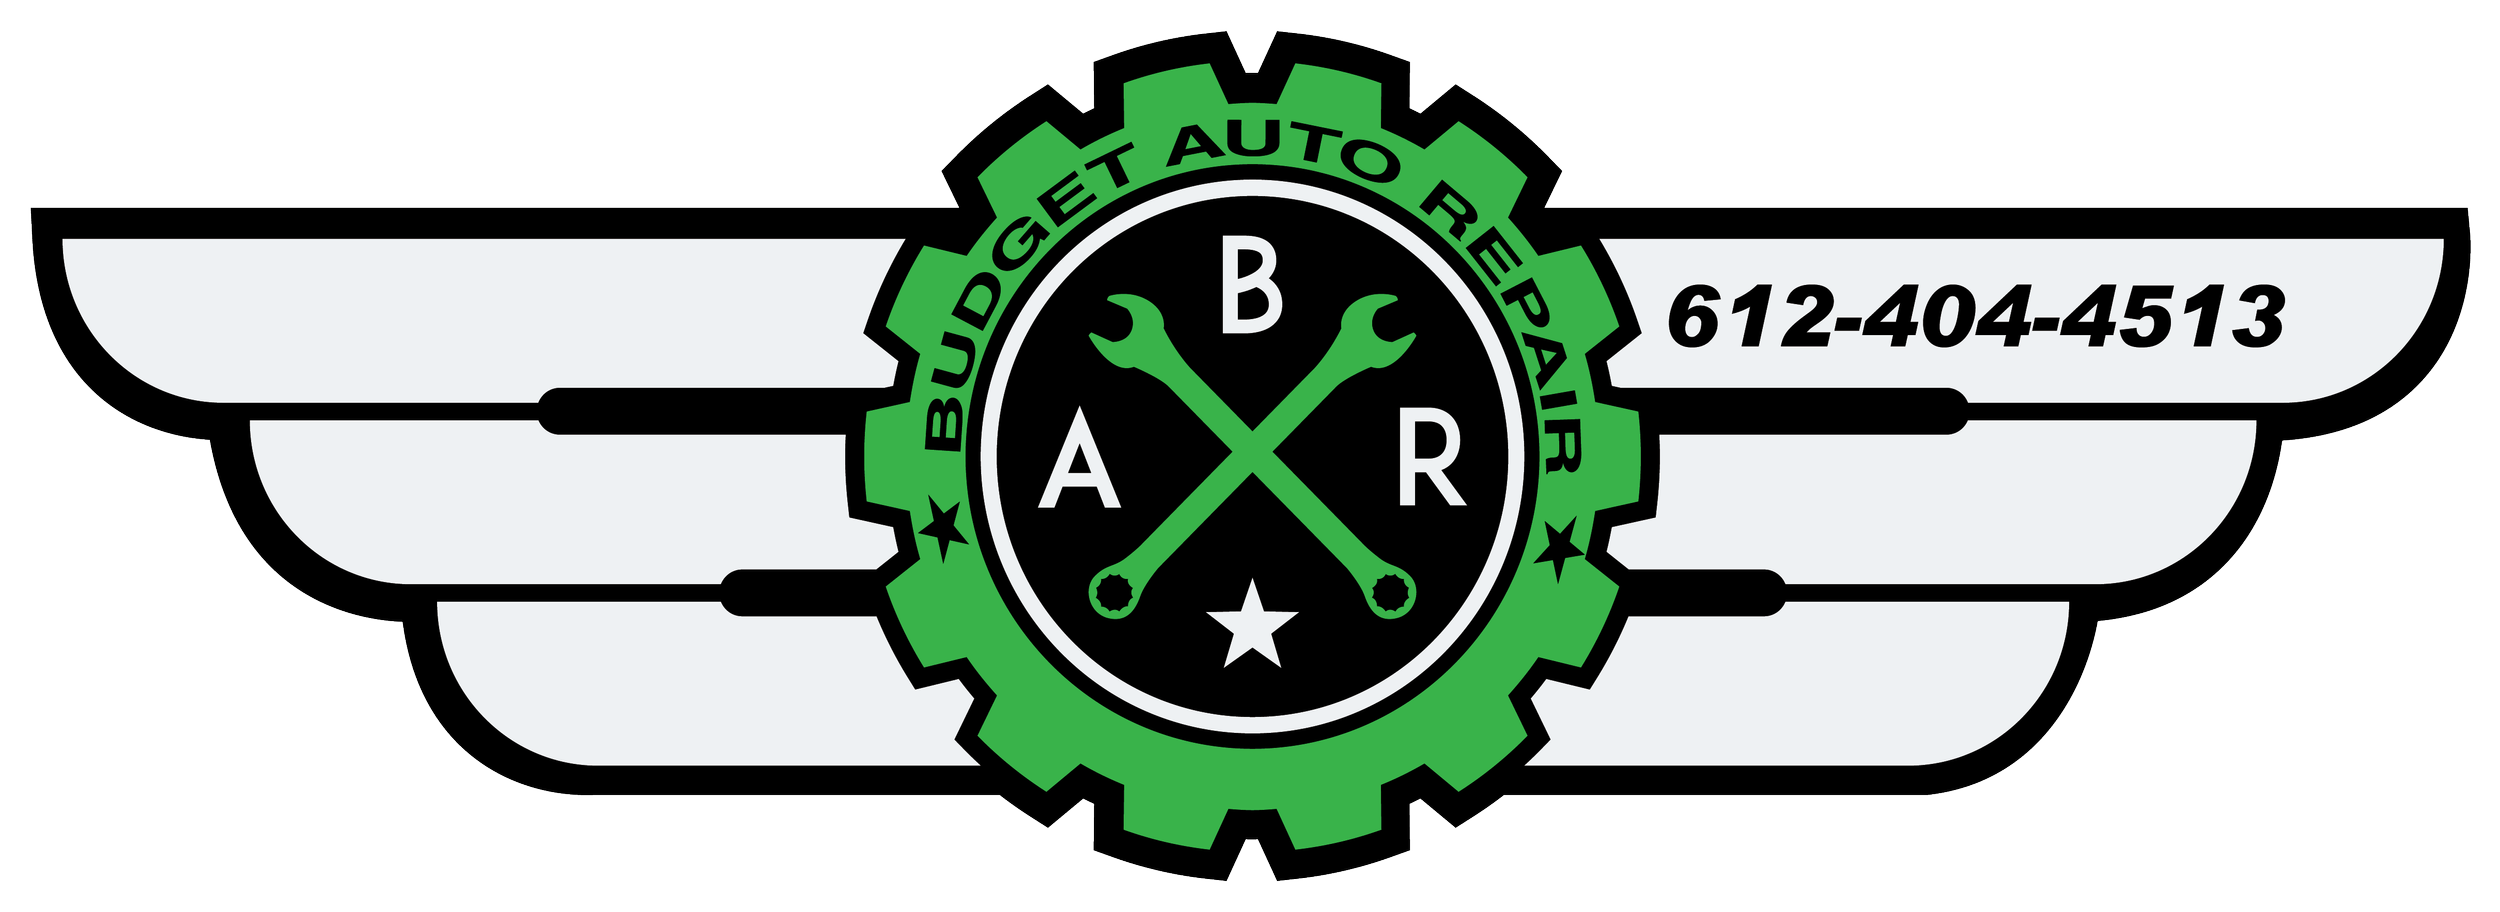 64583 - Budget Auto     Repair_Logo.png